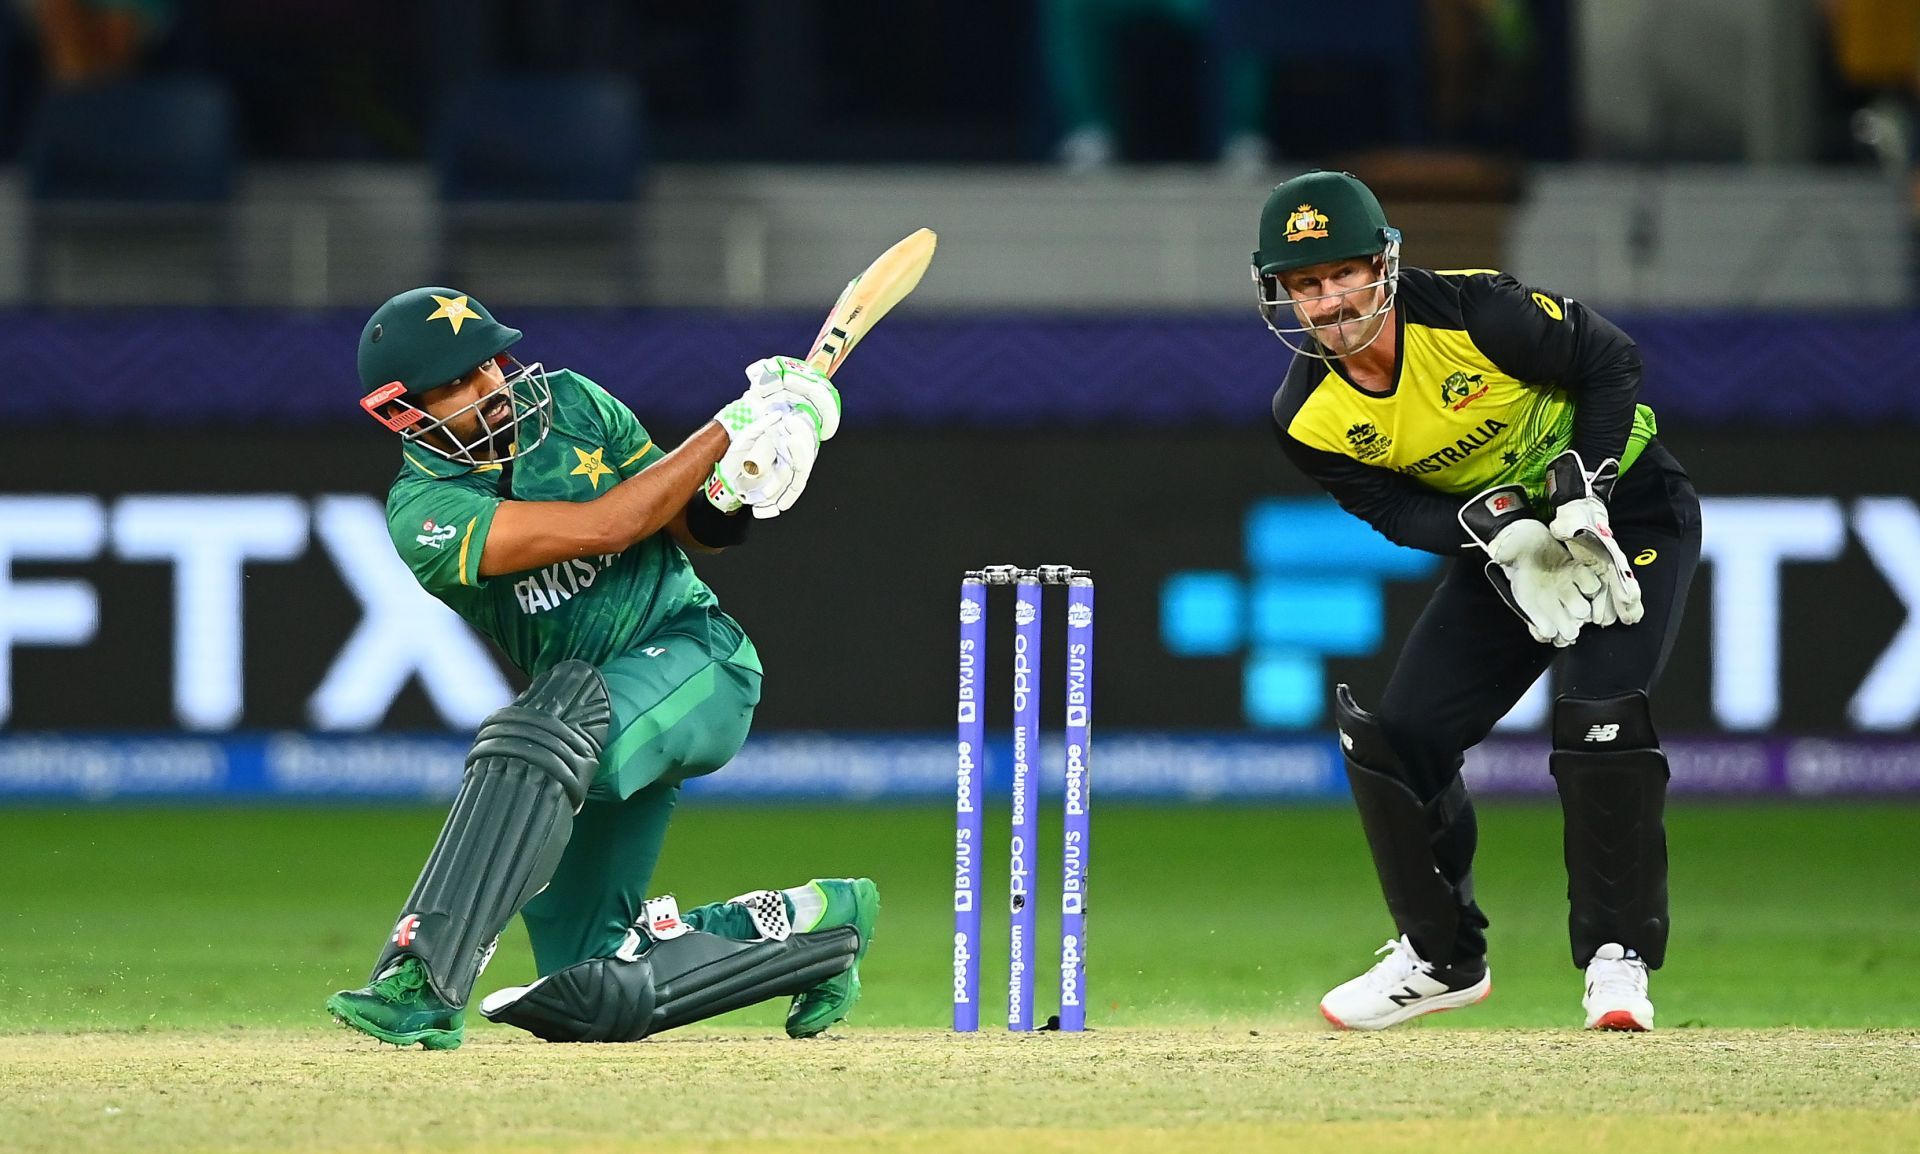 Pakistan v Australia - ICC Men